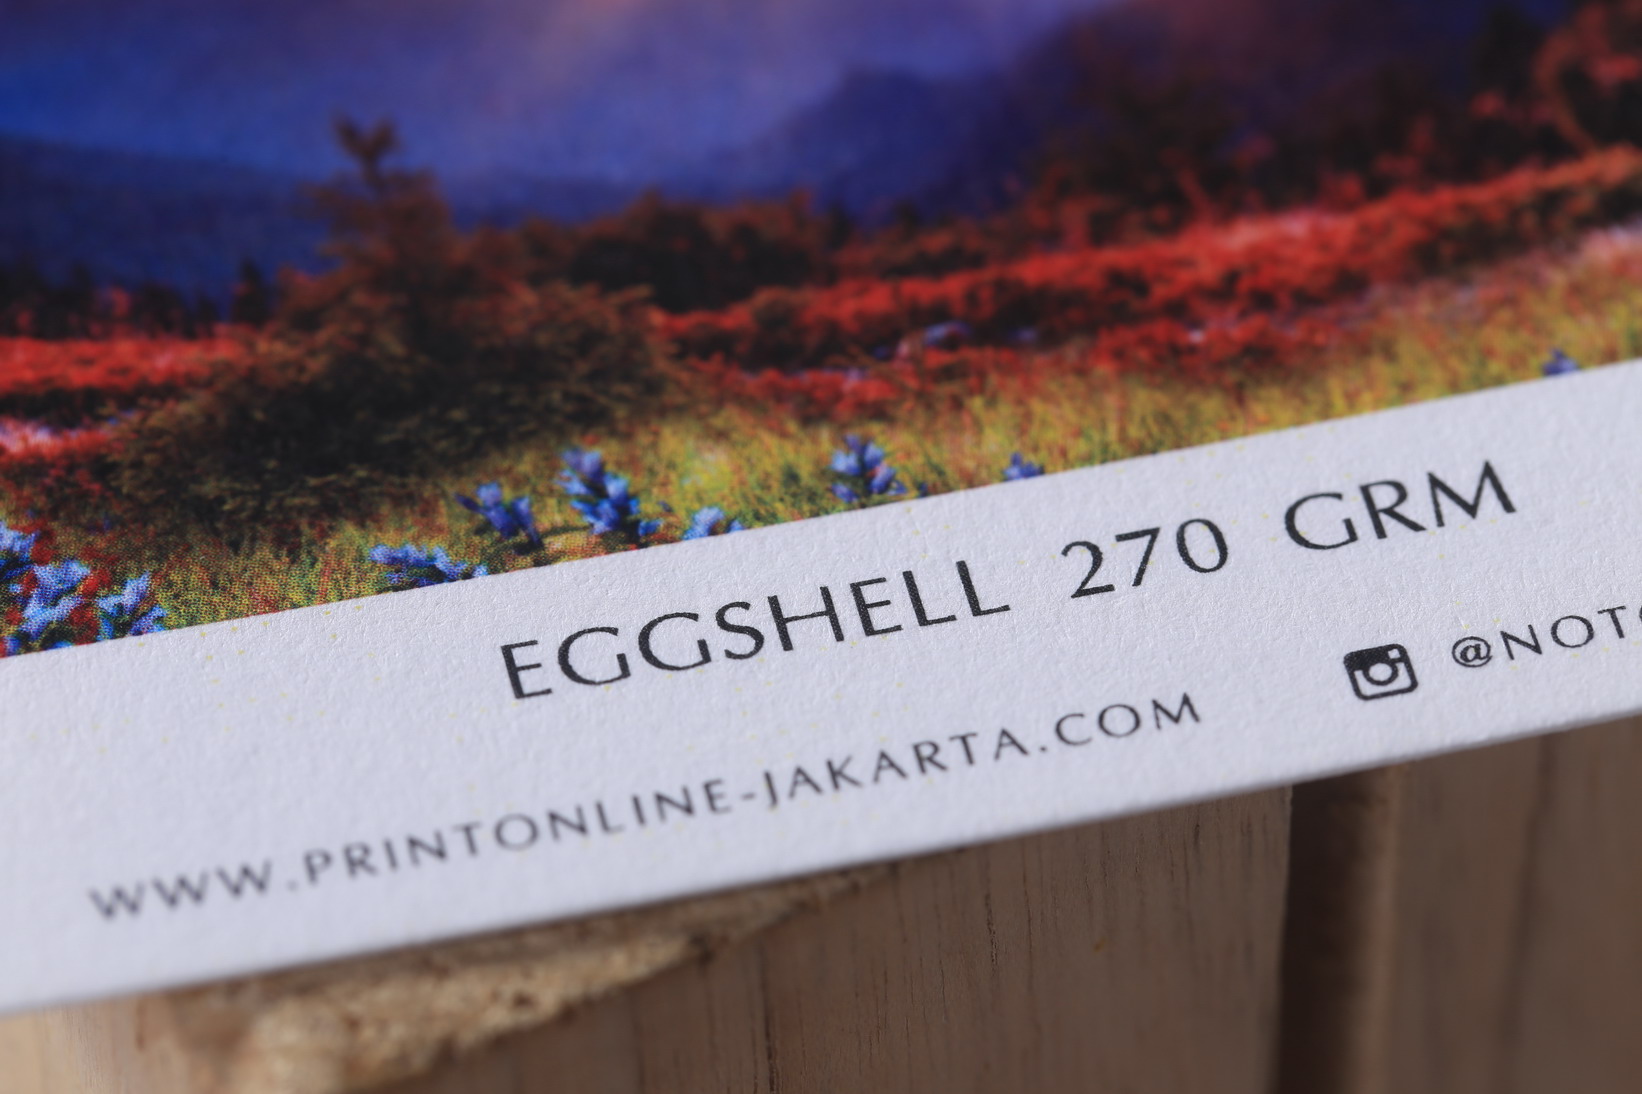 Eggshell  270 grm